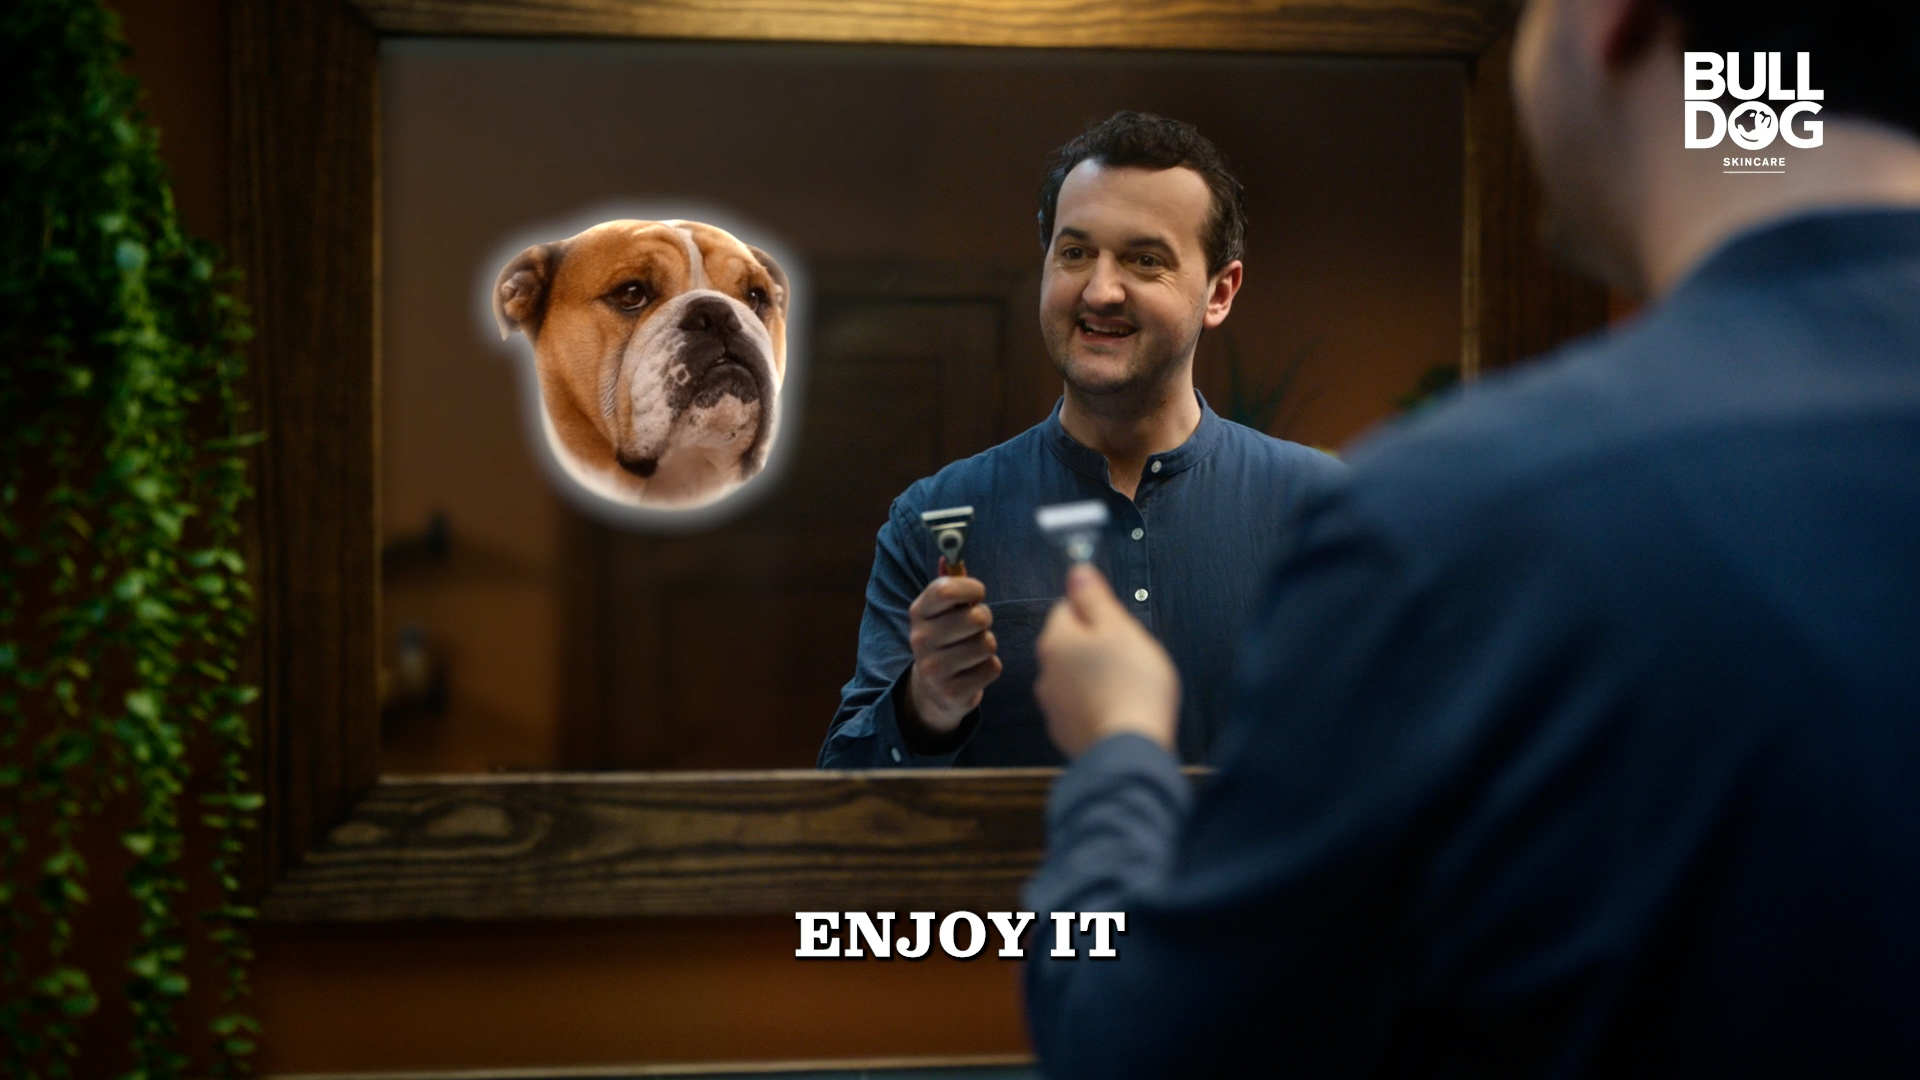 Bulldog released a fun ad campaign featuring a telepathic dog head